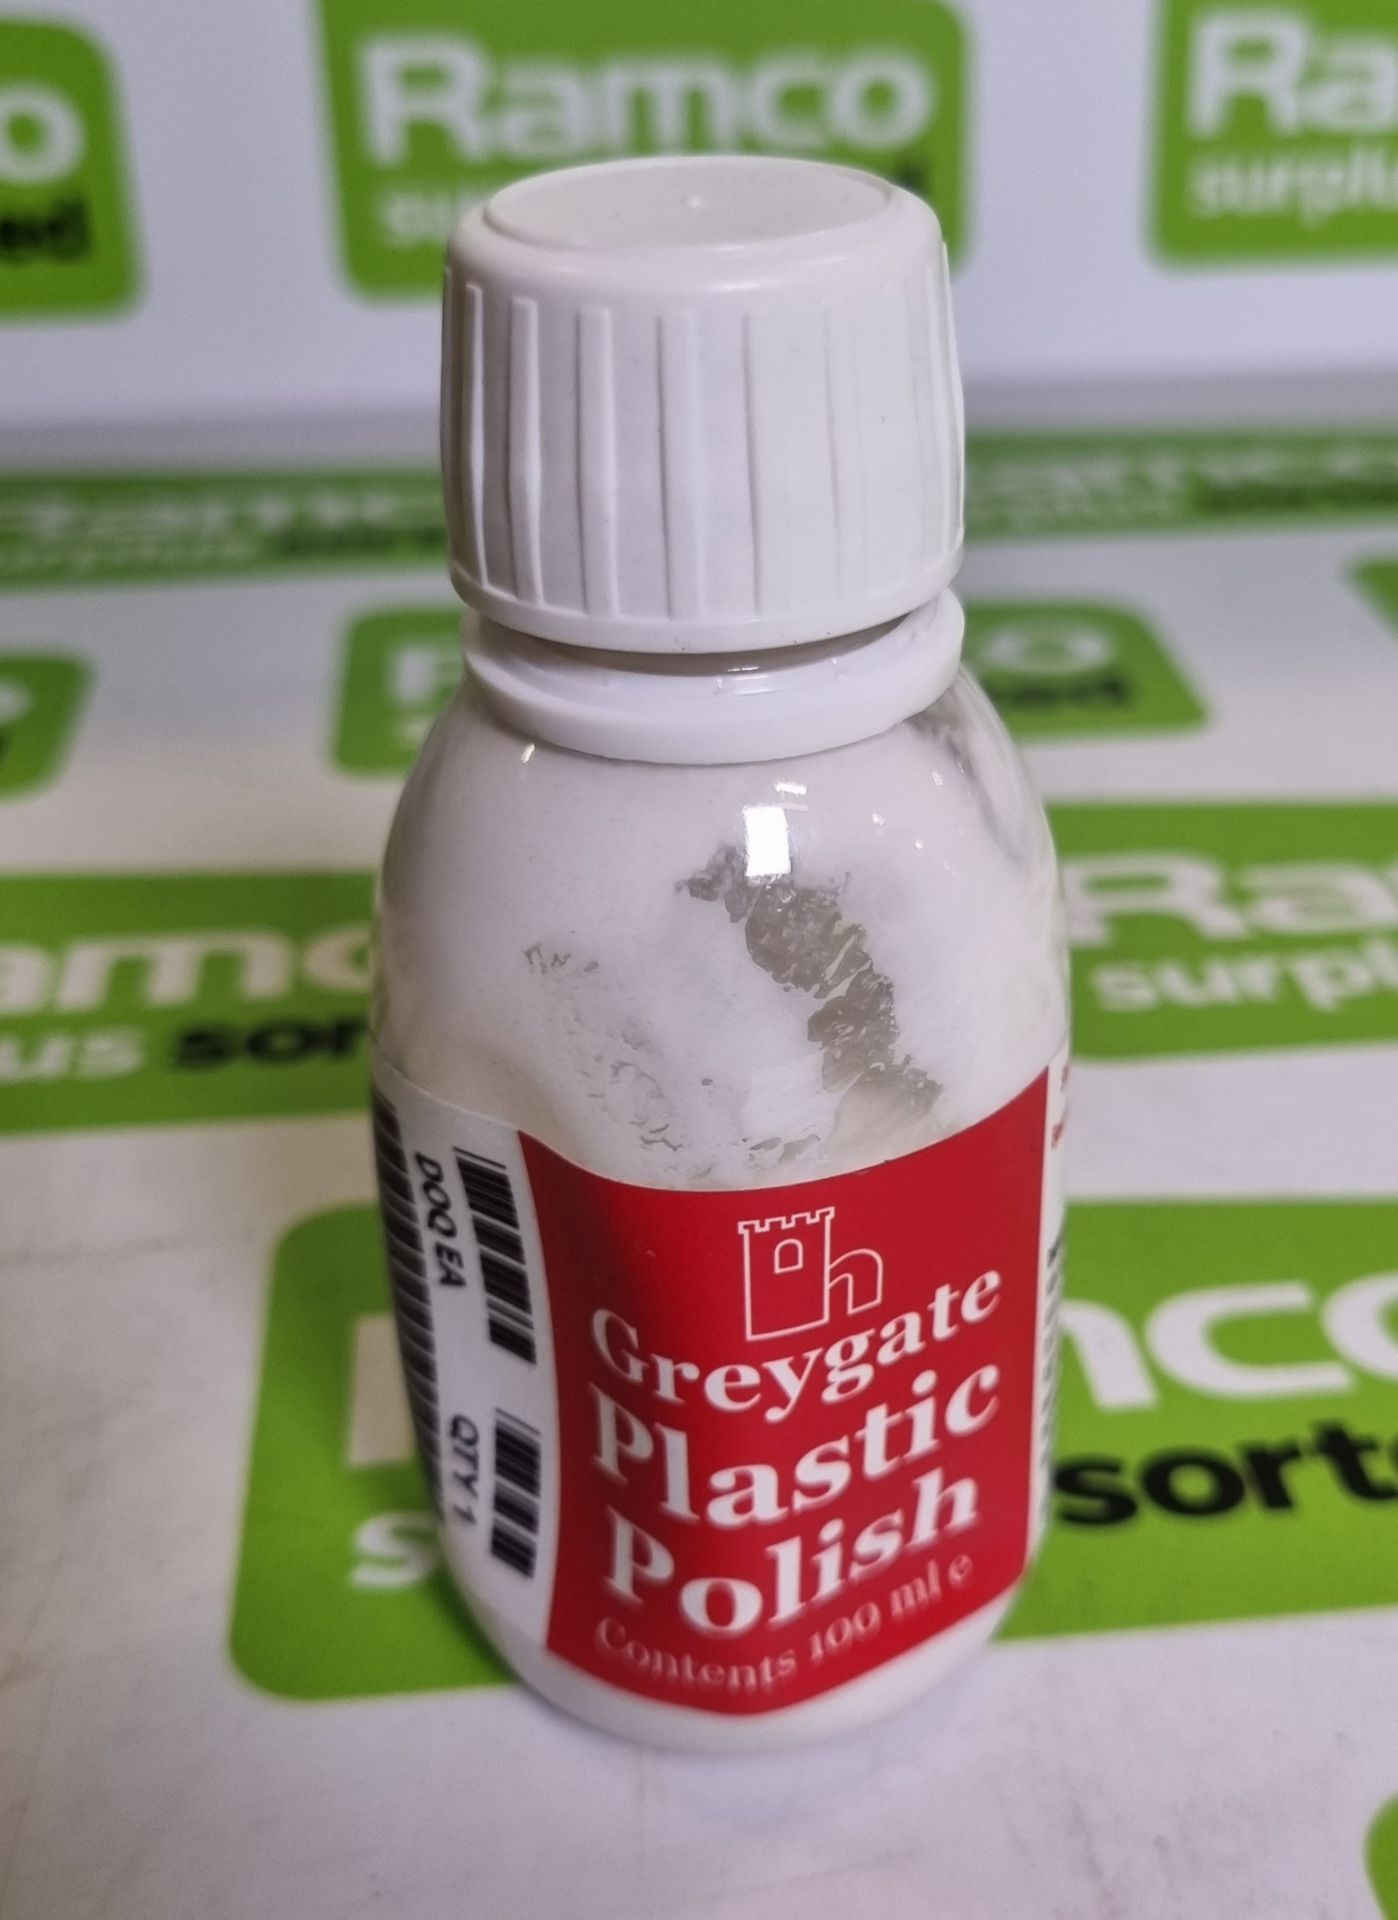 Greygate plastic polish, pack of 9 - Image 2 of 2